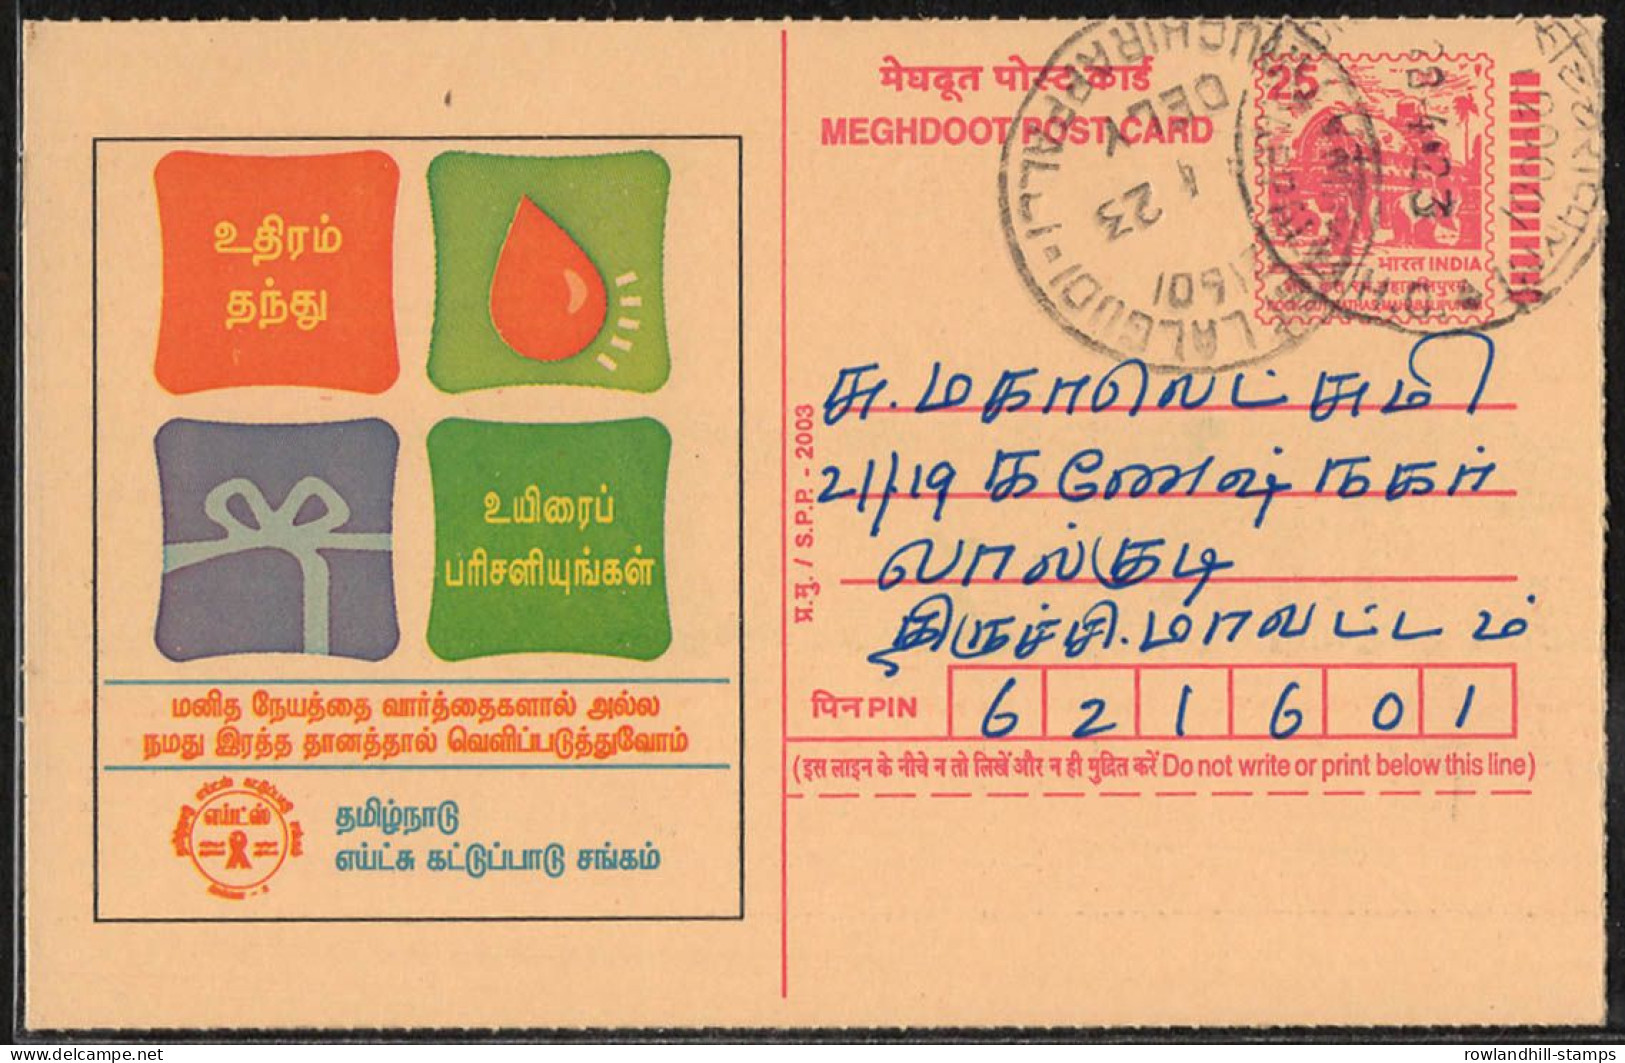 India, 2003, BLOOD DONATION, AIDS CONTROL, Meghdoot Postcard, Used, Stationery, Postcard, Health, Tamilnadu, A23 - First Aid